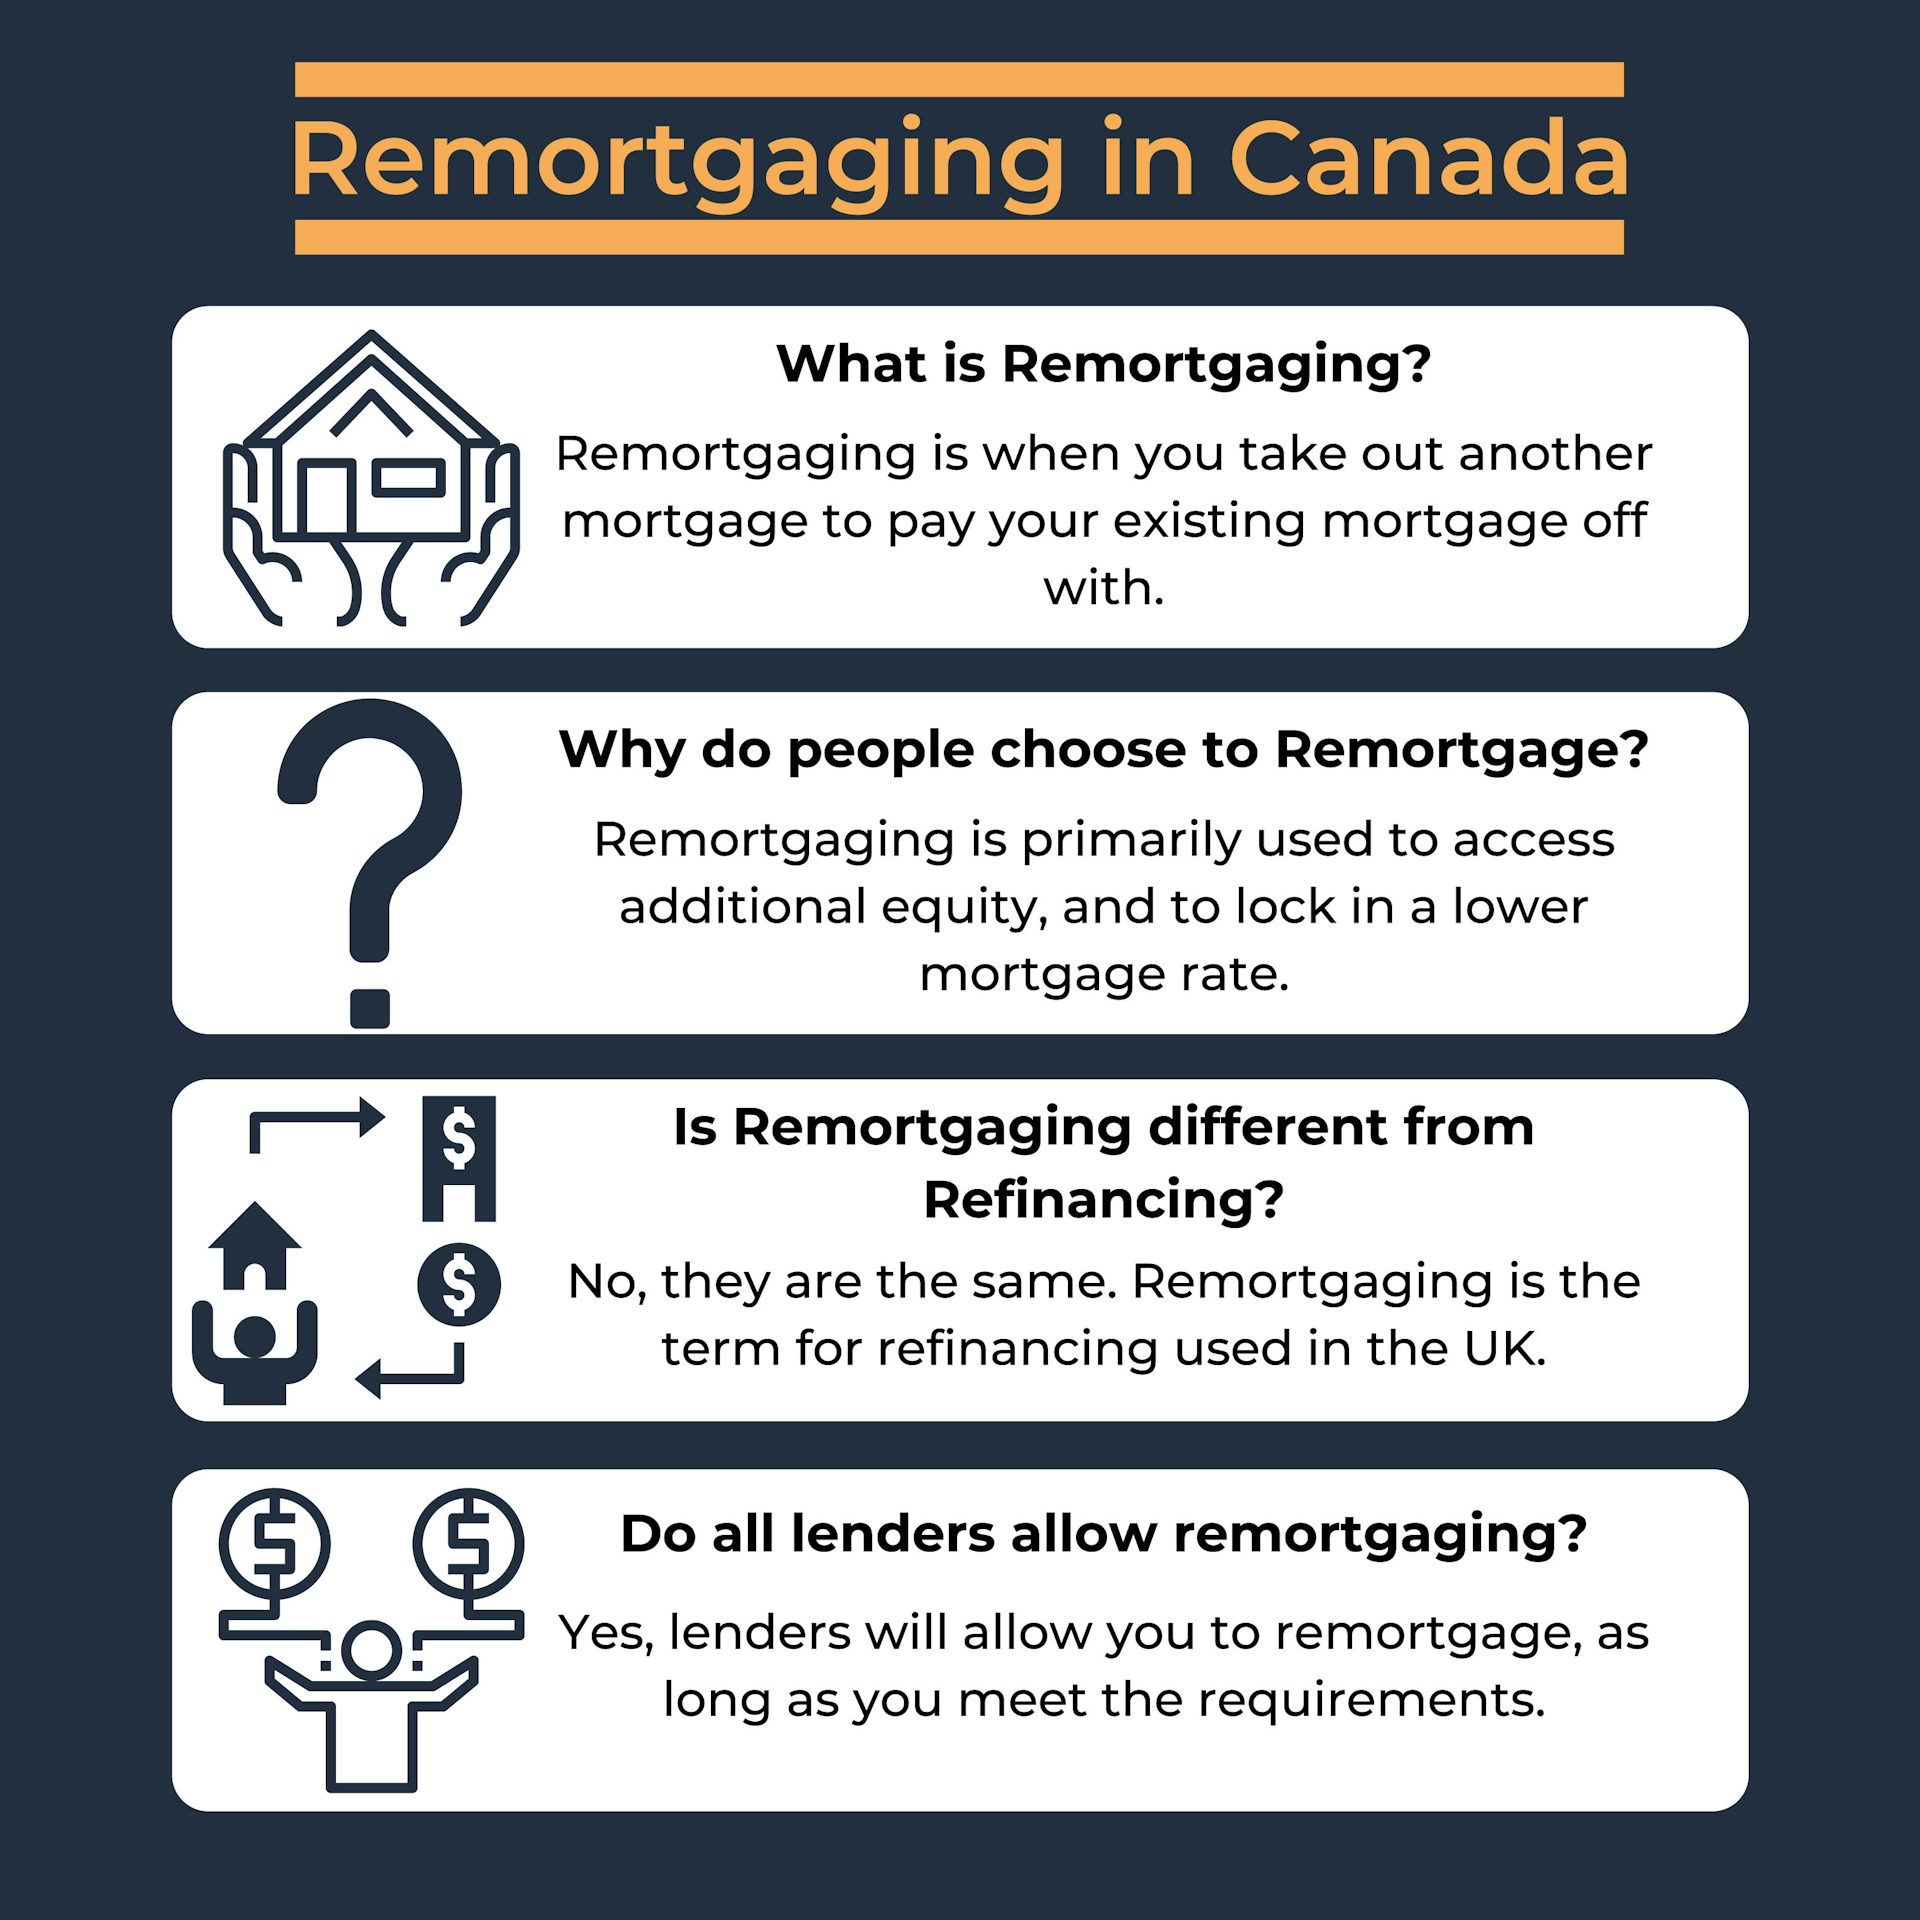 Remortgaging in Canada